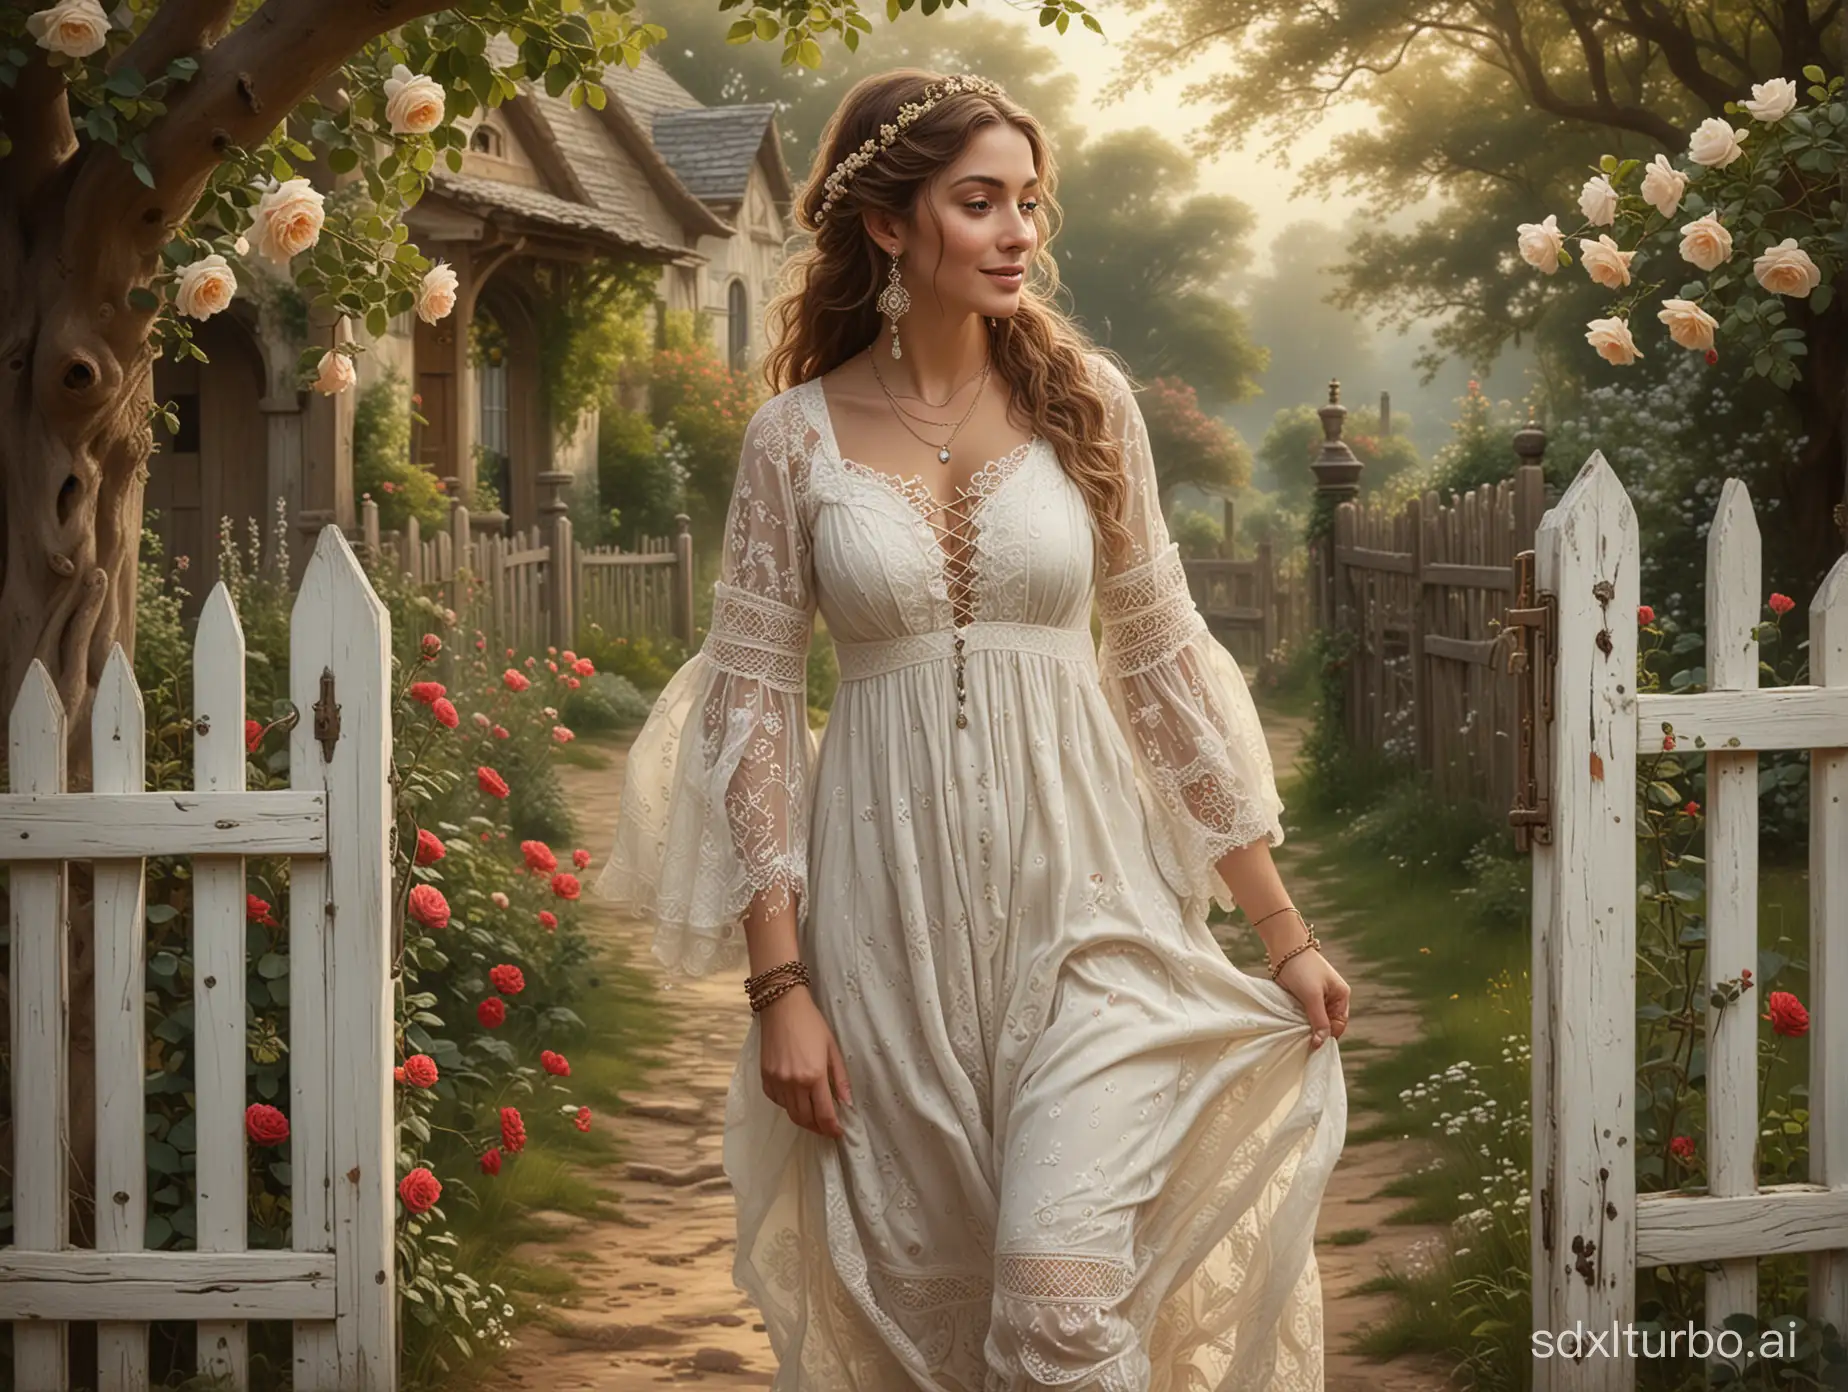 Cheerful-Woman-in-Vintage-Renaissance-Dress-Walking-Through-Tranquil-Bohemian-Fantasy